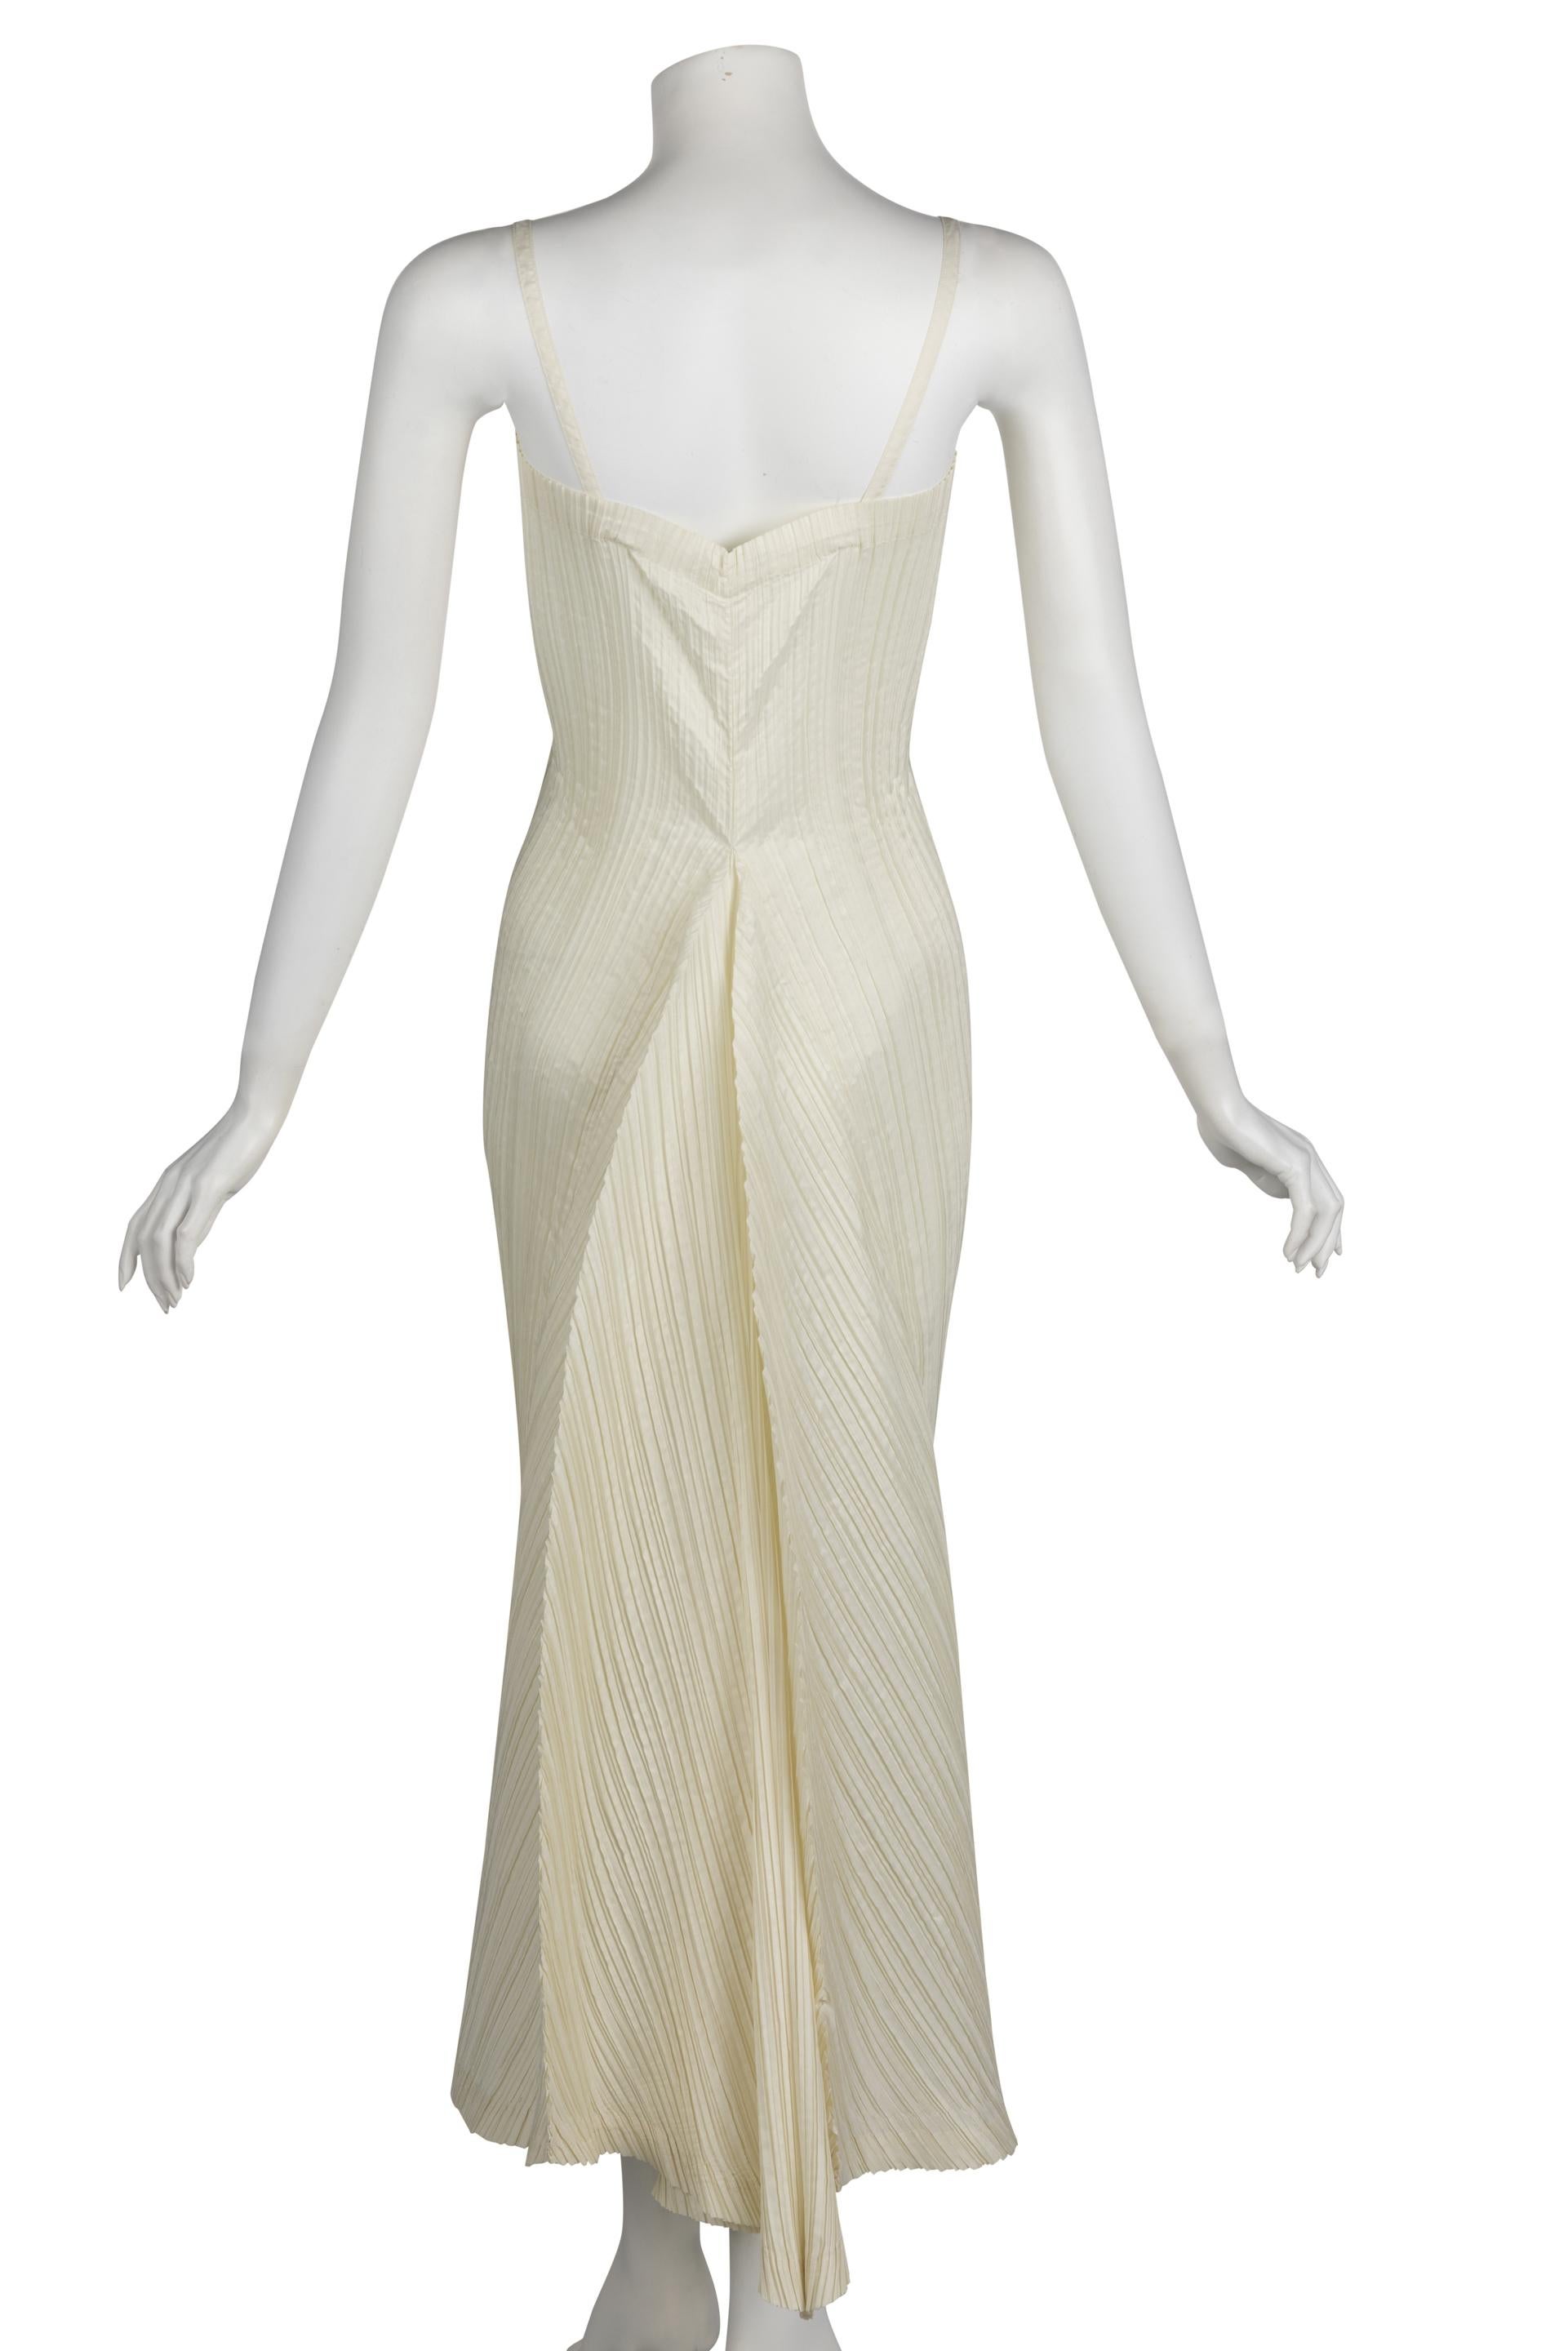 Women's  Vintage Issey Miyake Ivory Sleeveless Sculptural Dress Museum Held, 1980s 